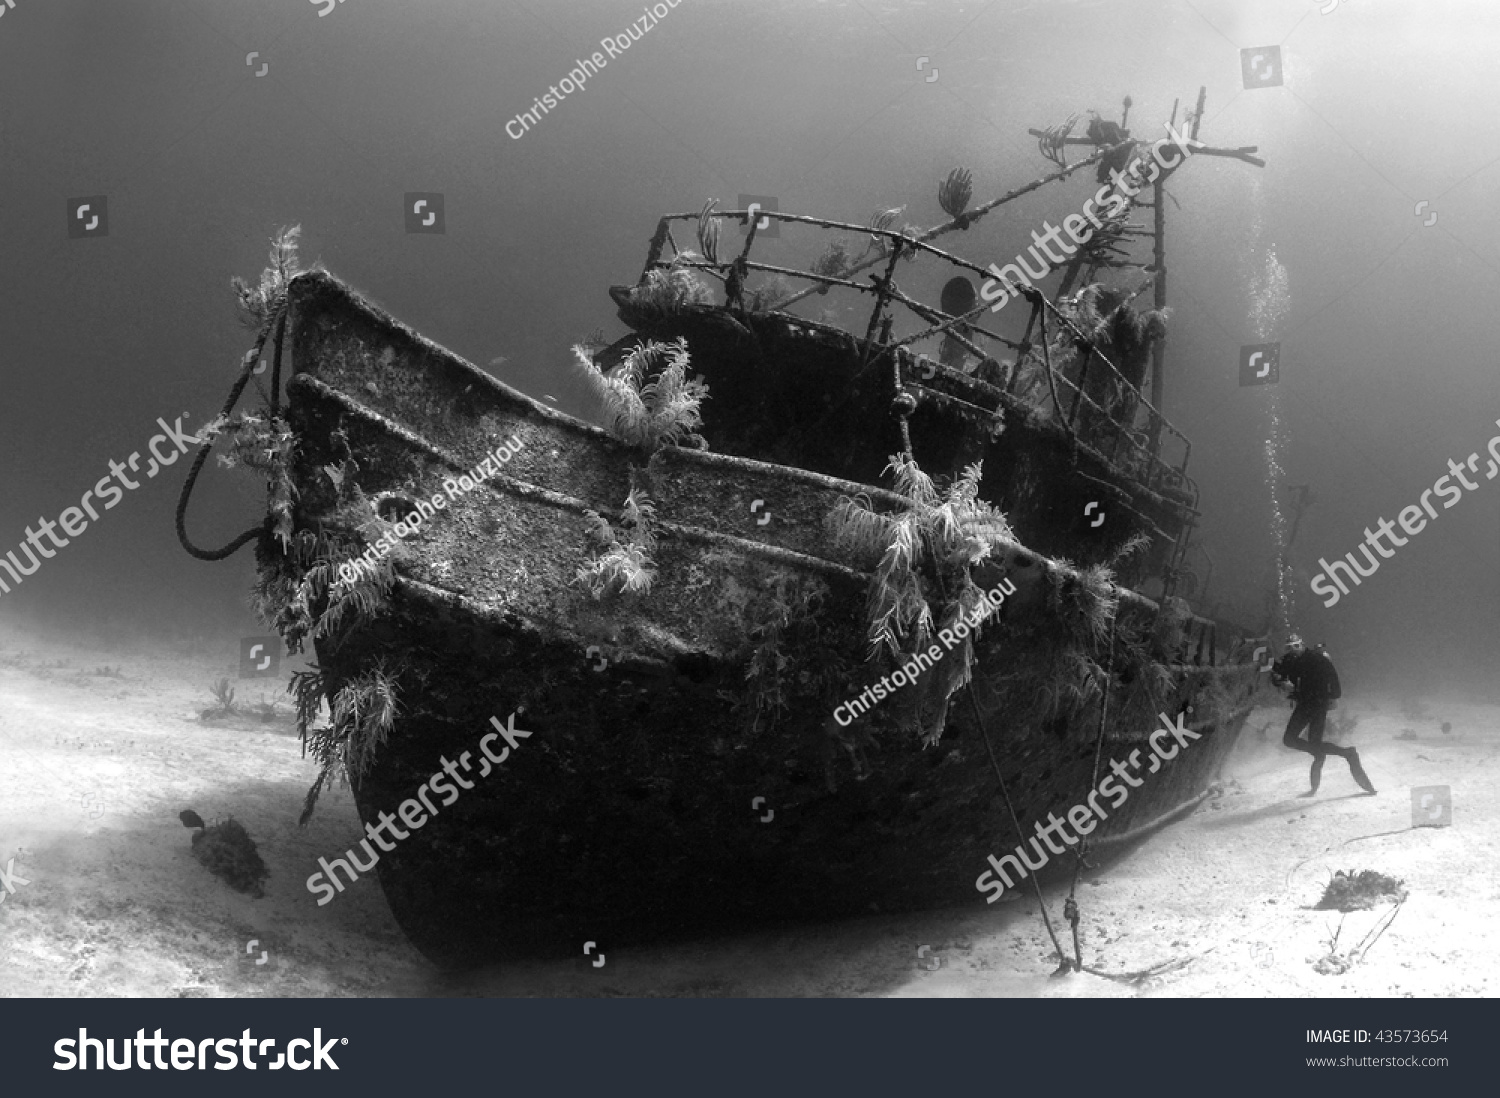 Sea Viking Shipwreck Stock Photo 43573654 - Shutterstock